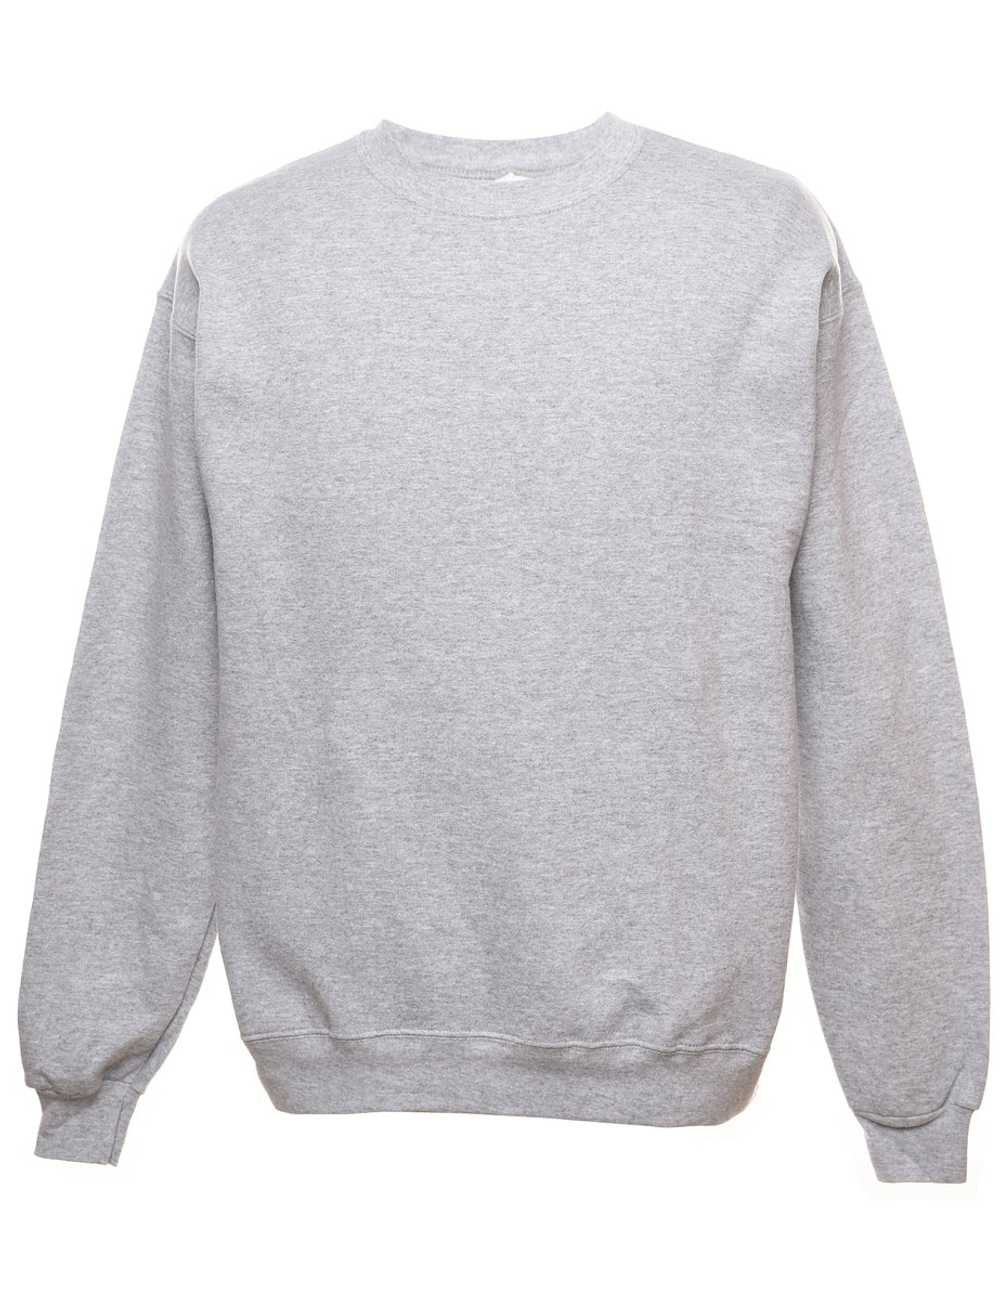 Grey Plain Round Neck Sweatshirt - M - image 1